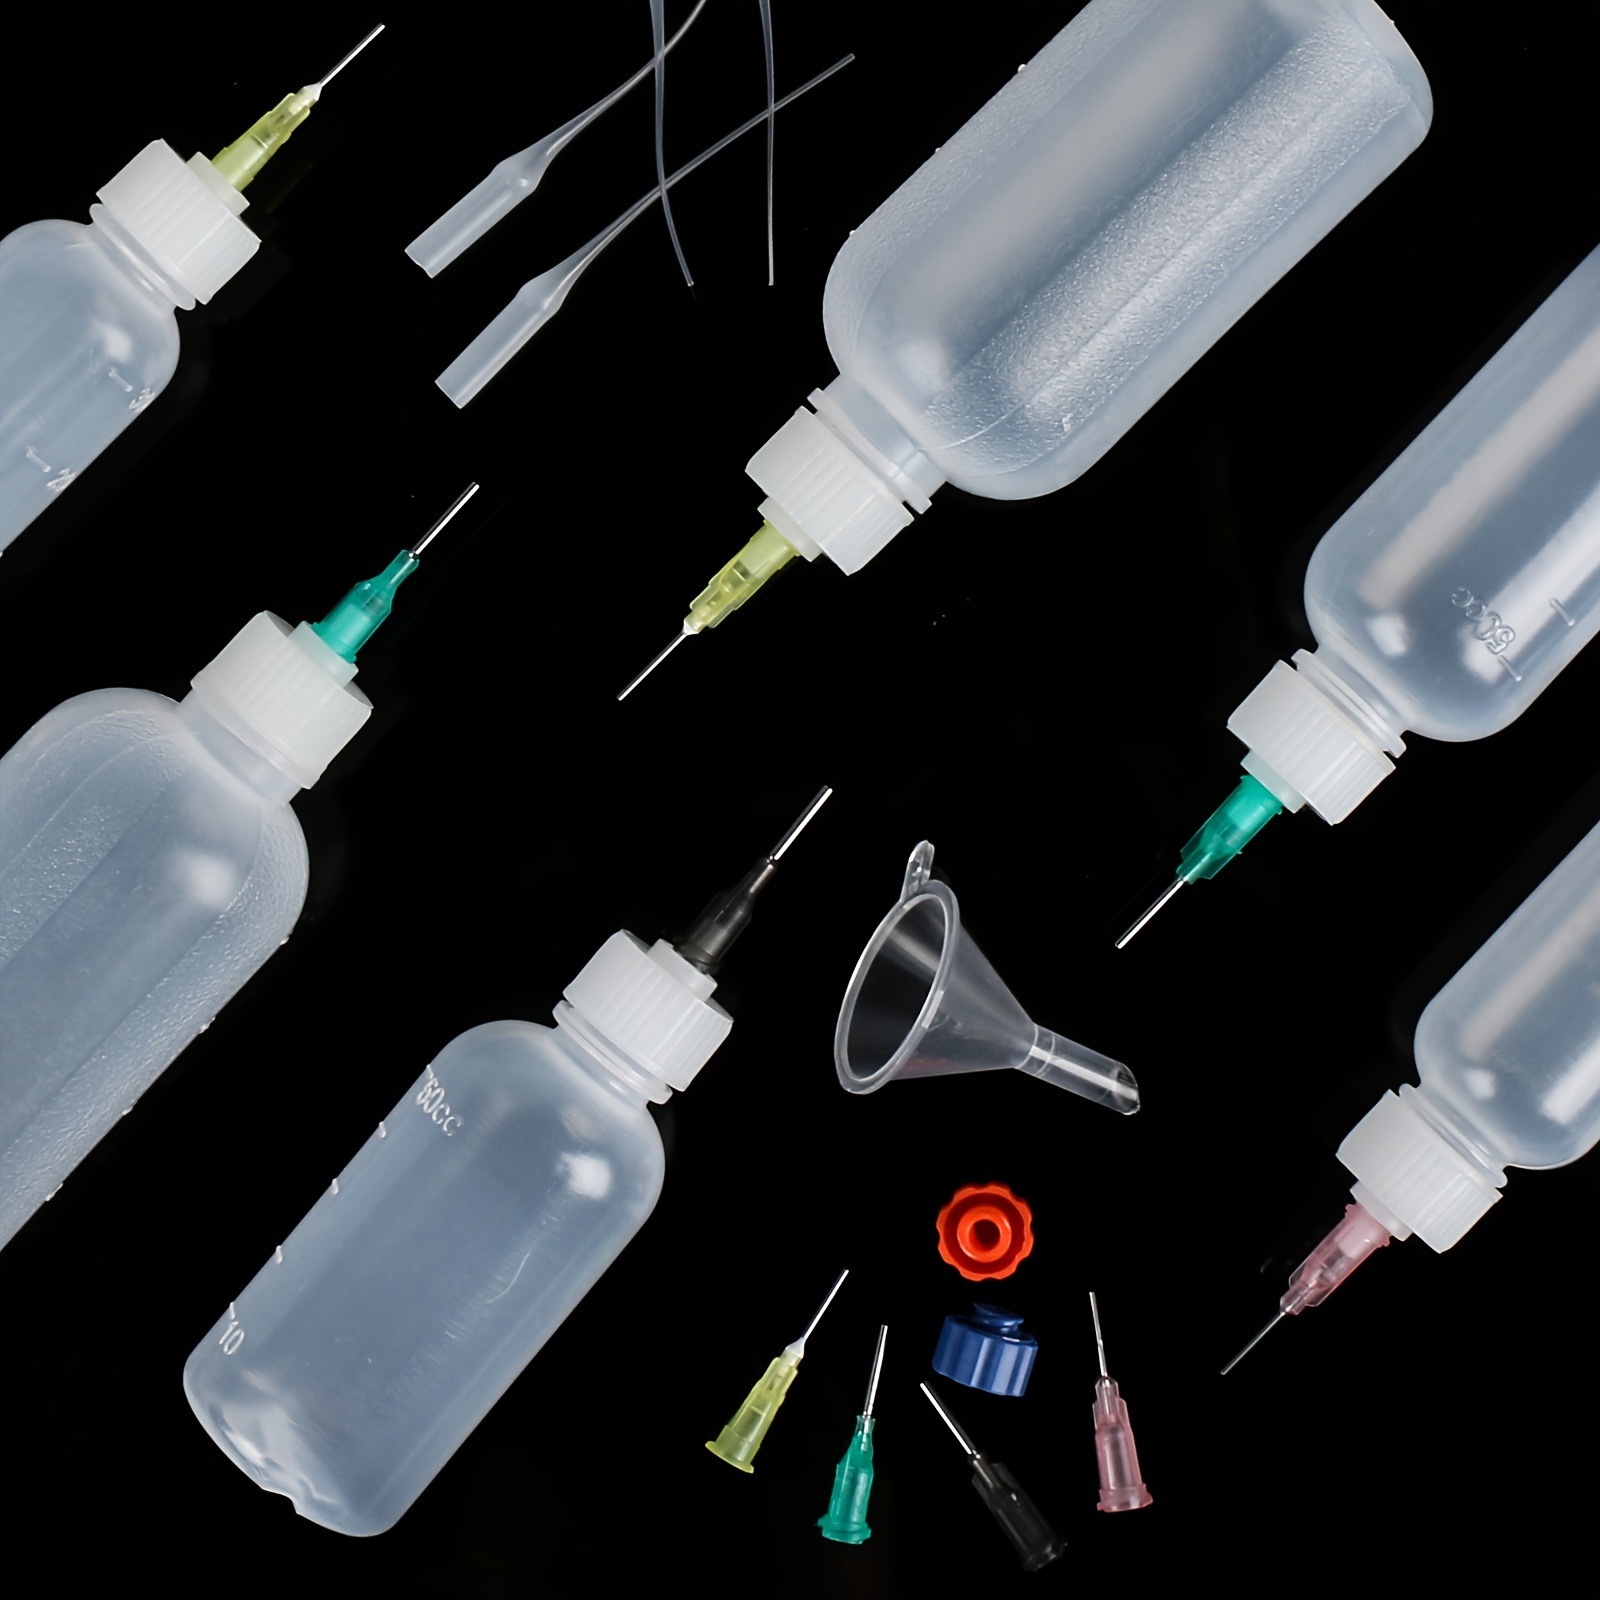  6 Pcs 2 Ounce Needle Tip Glue Bottle, Tip Applicator Bottle,  for Glue,Liquid,Oil, DIY Crafts Etc, Multi-Color. : Arts, Crafts & Sewing